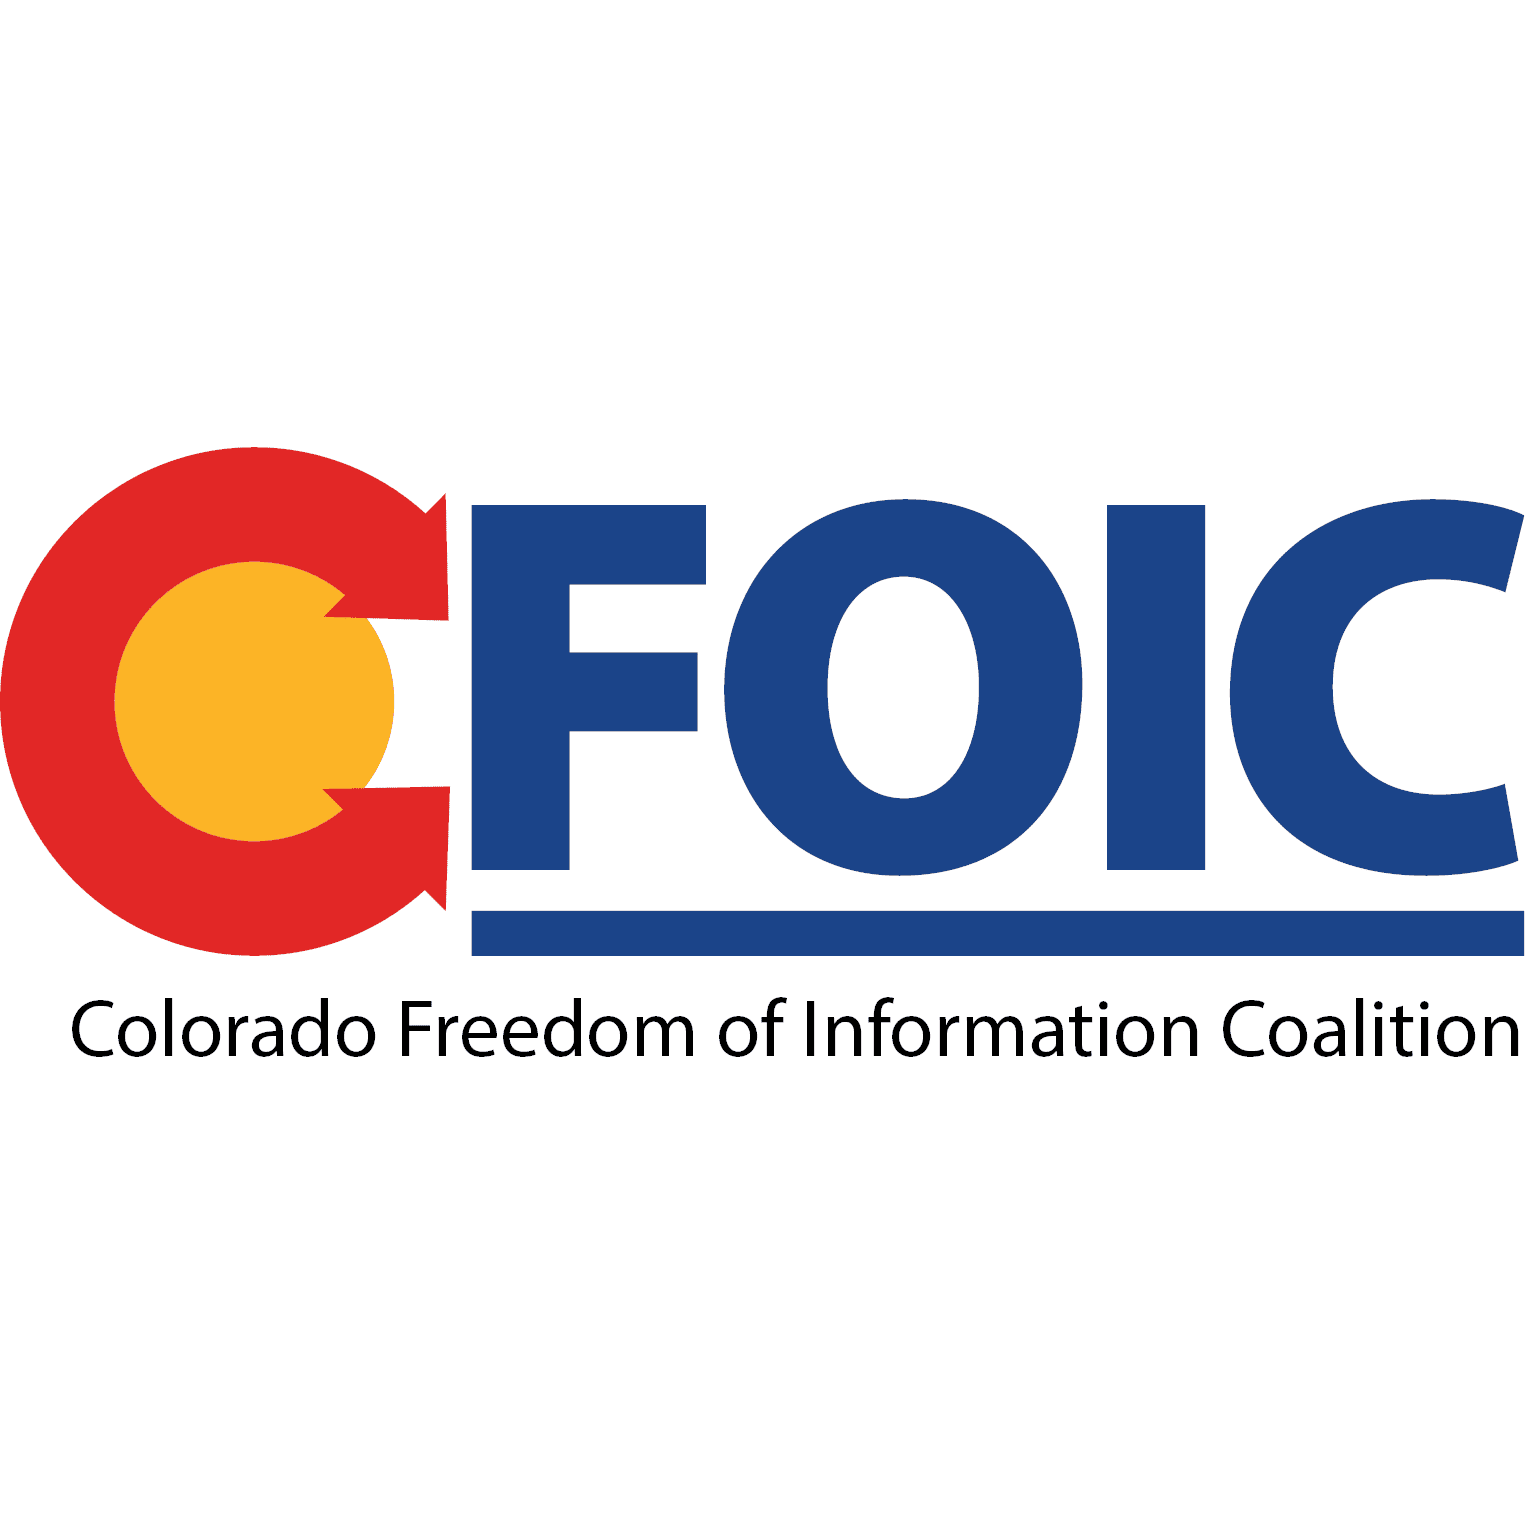 Colorado Freedom of Information Coalition